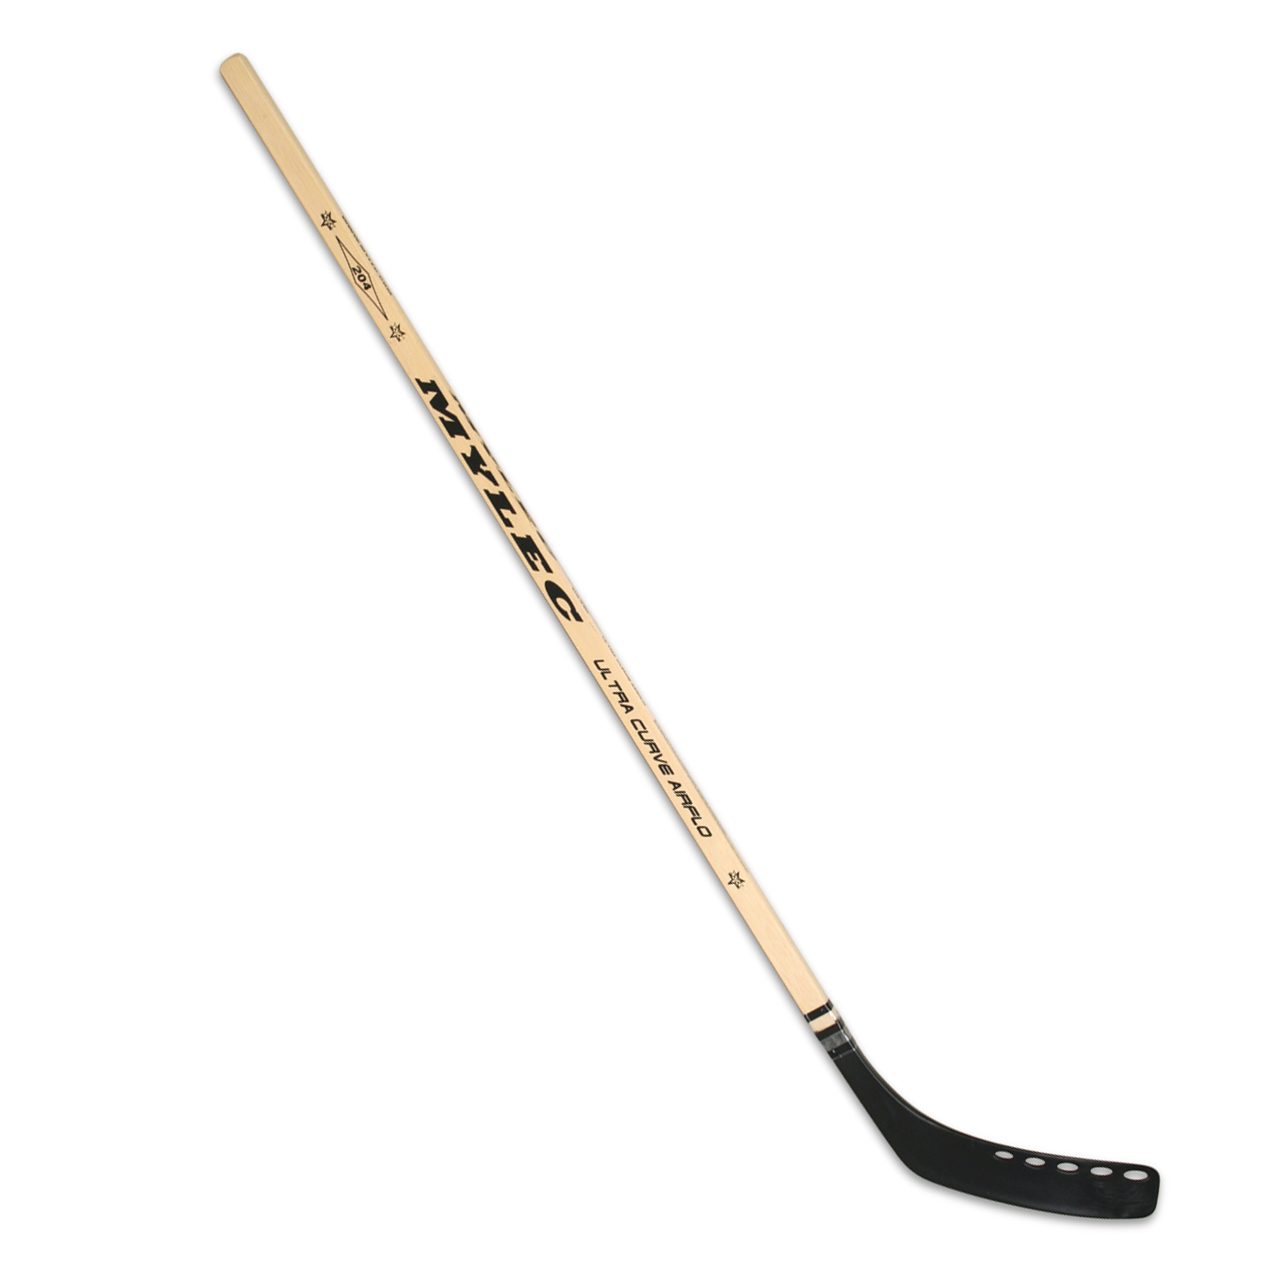 Mylec Jet-Flo 307 Junior 2-Piece Street Hockey Stick Black Lists @ $16 NEW 